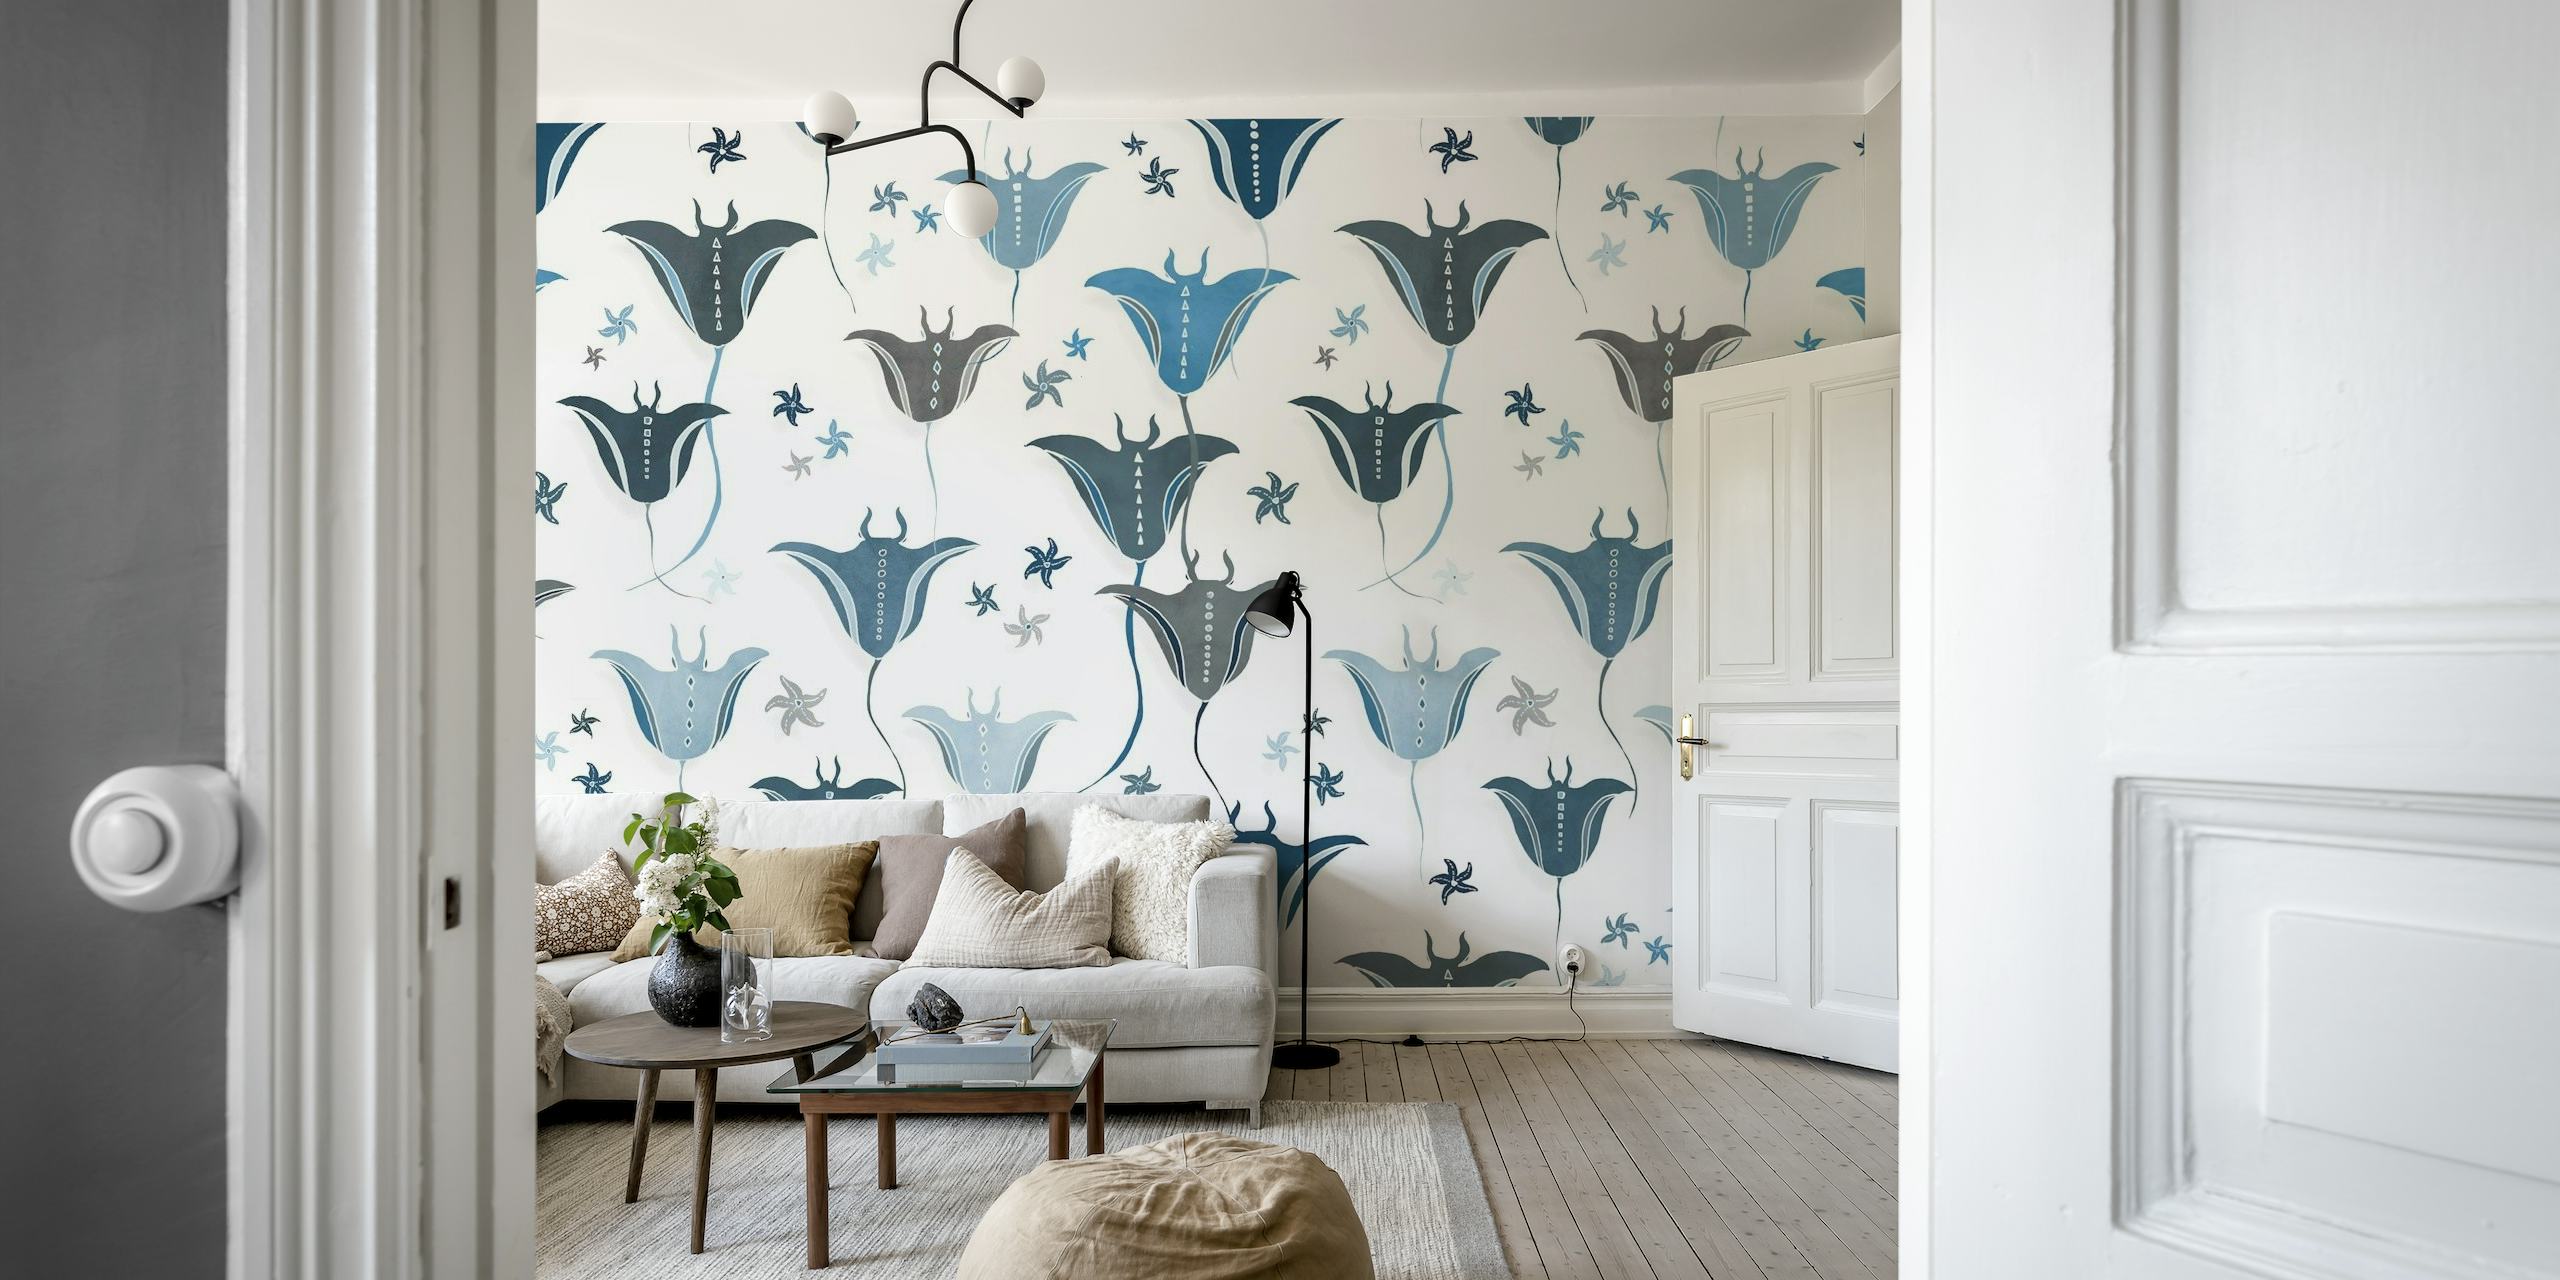 Blue manta rays in the ocean wallpaper